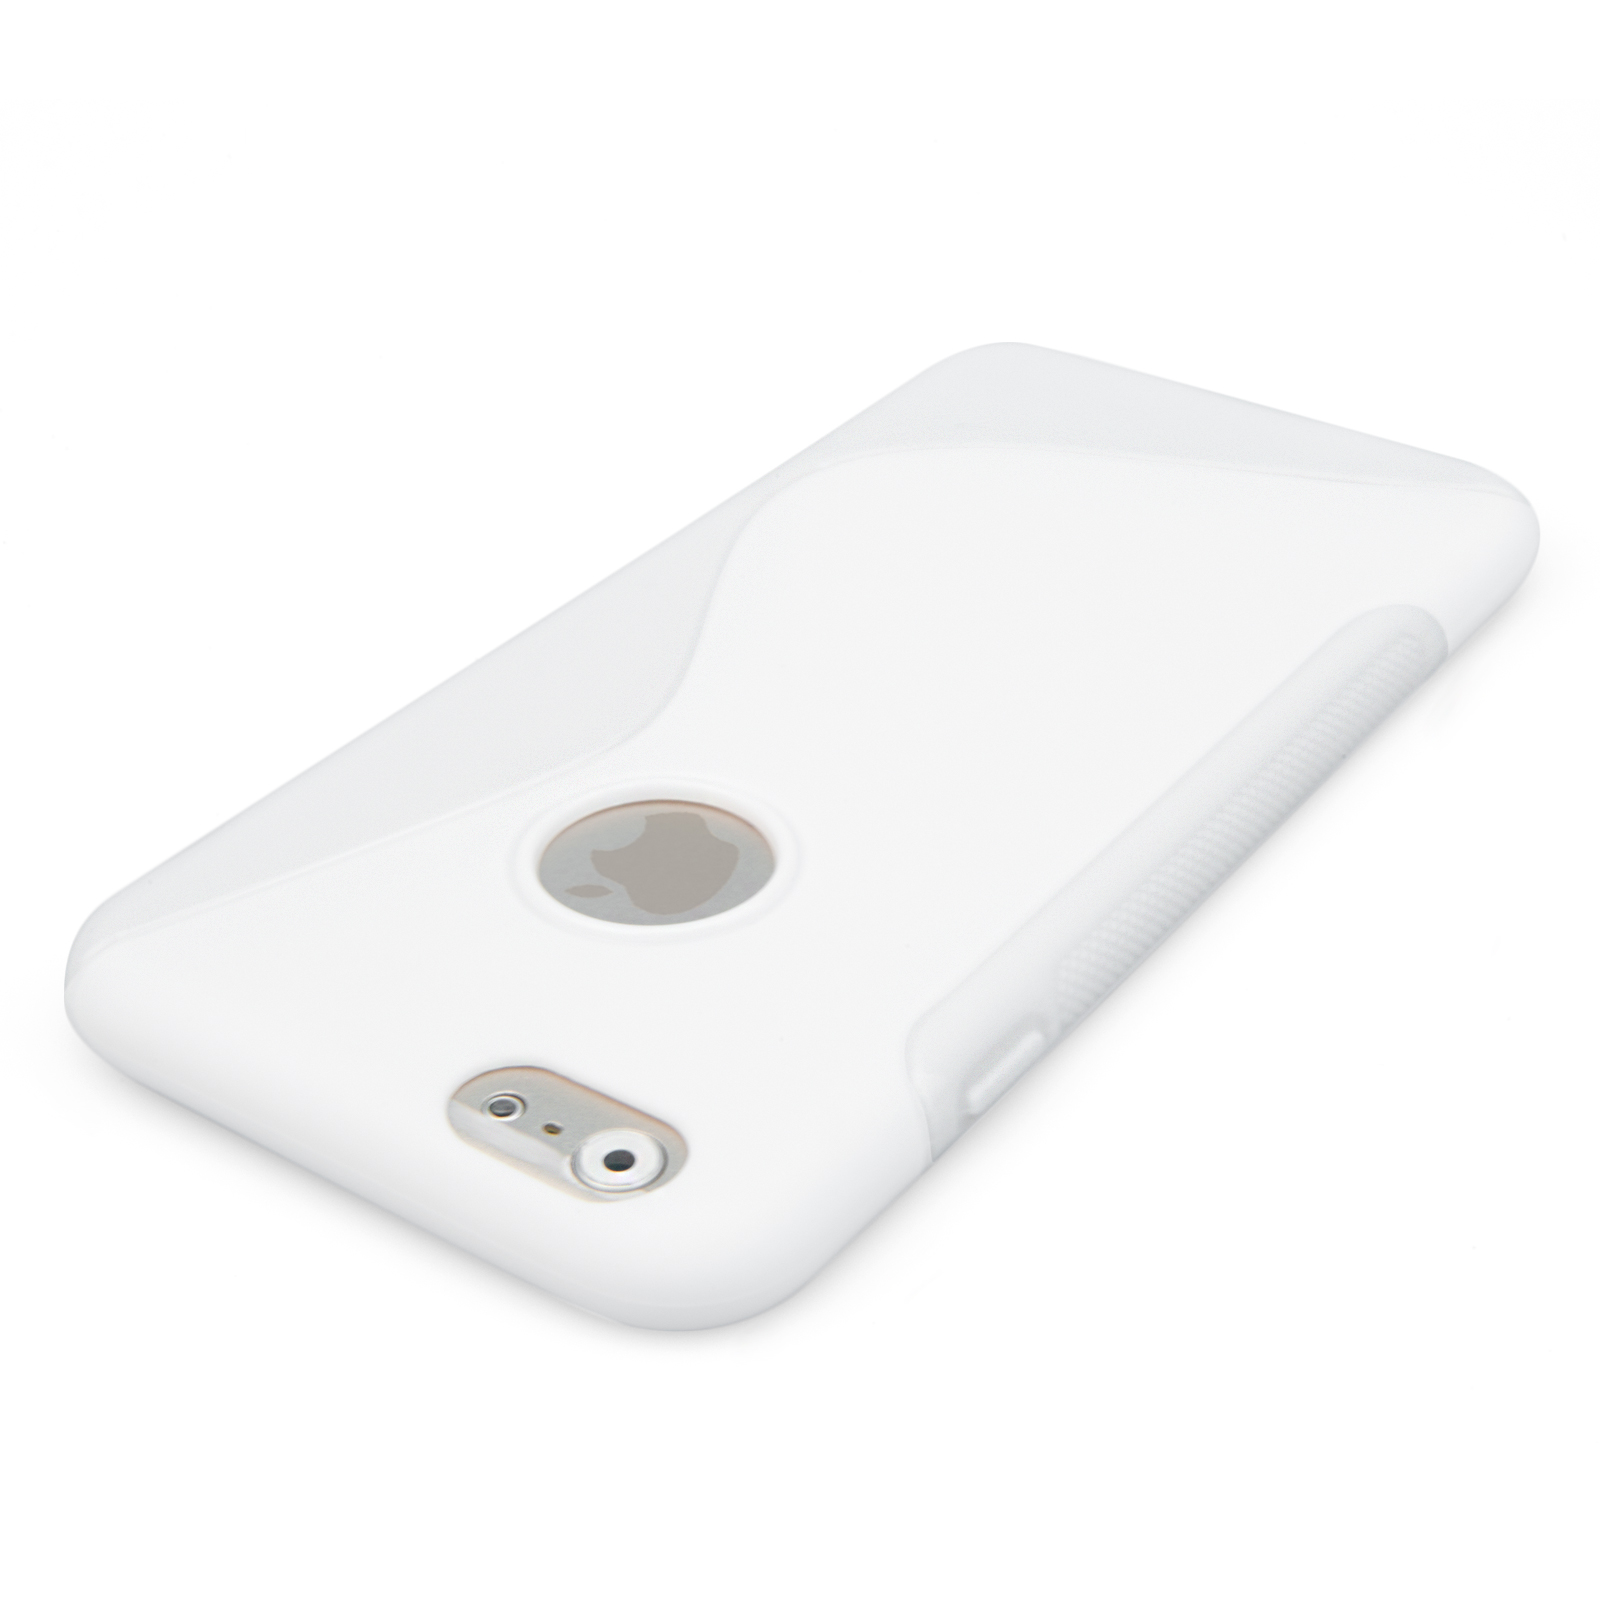 Caseflex iPhone 6 and 6s Silicone Gel S-Line Case - White